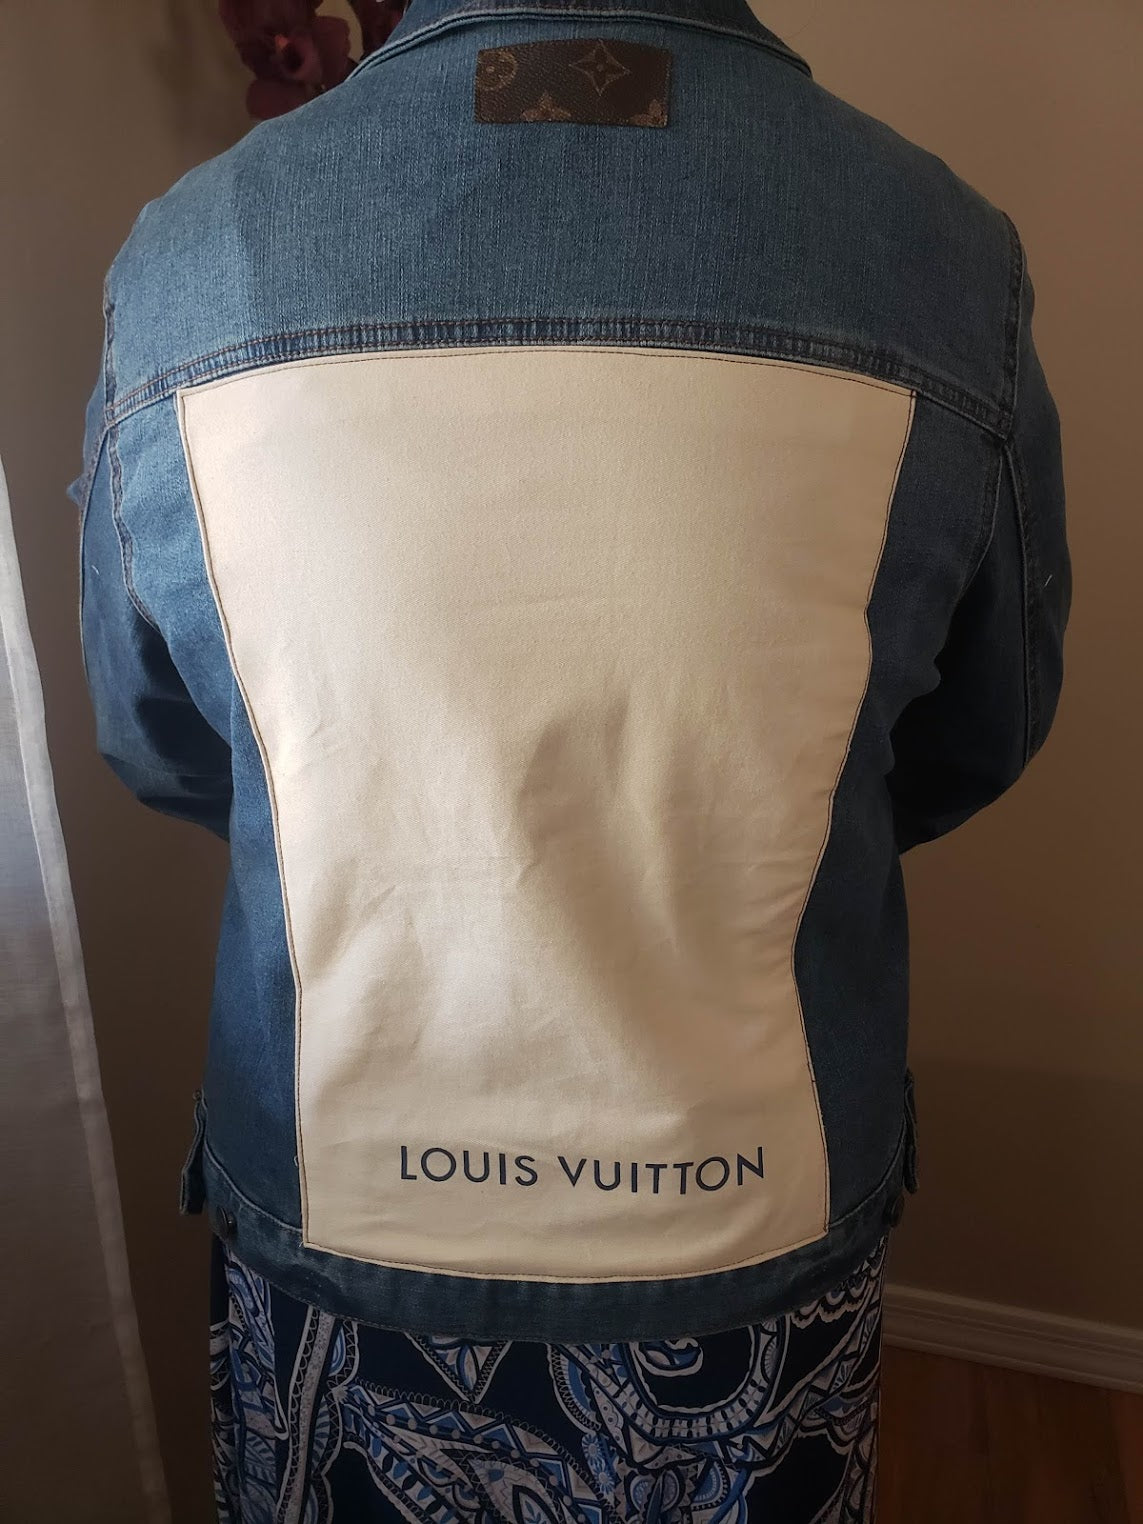 Handmade denim jacket with Louis Vuitton dustbag.